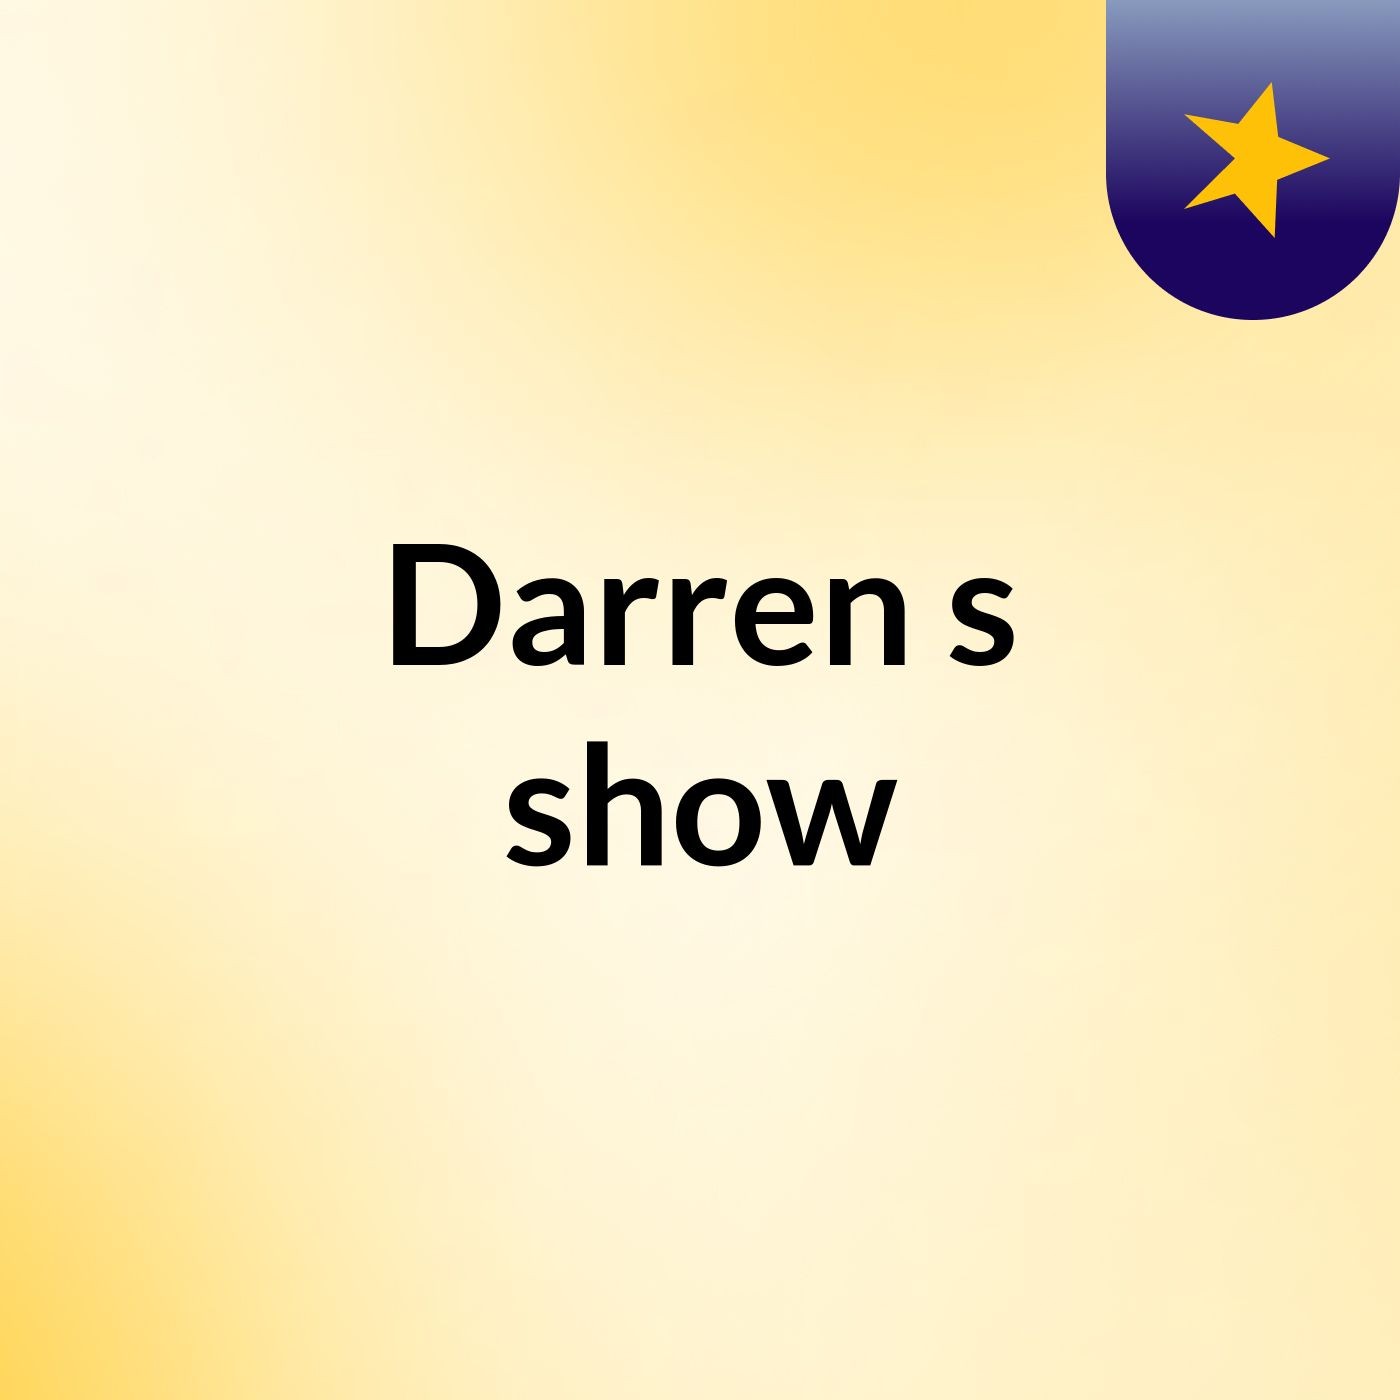 Darren's show